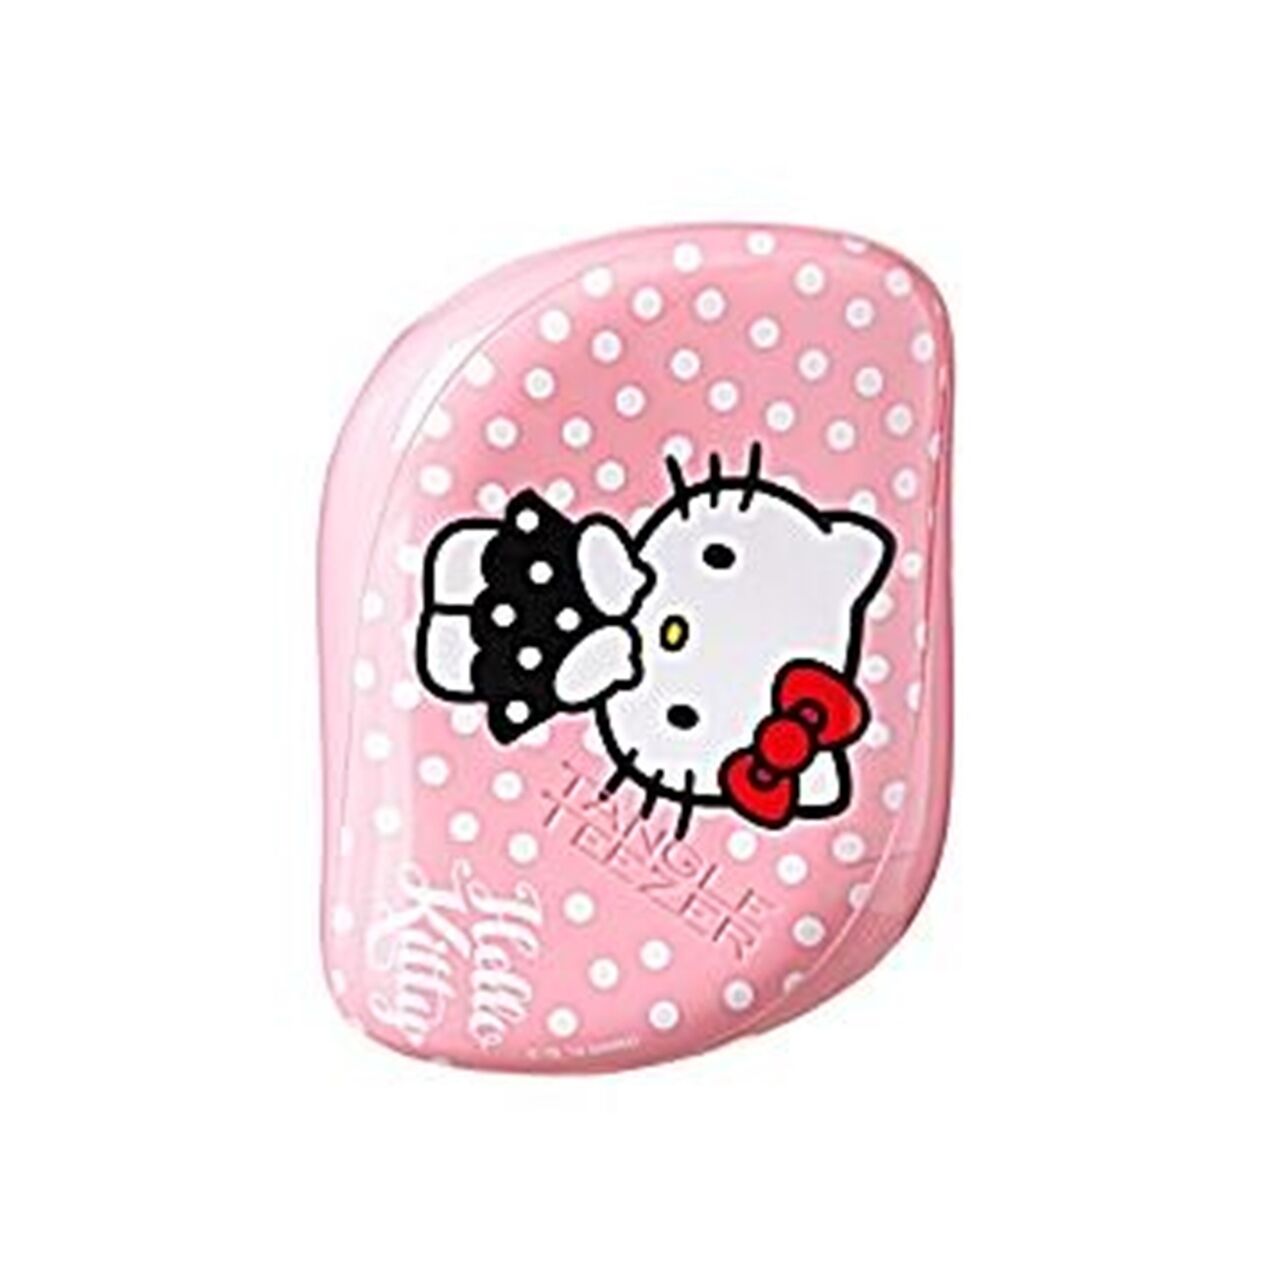 Tangle Teezer Compact Styler - Hello Kitty - Pink